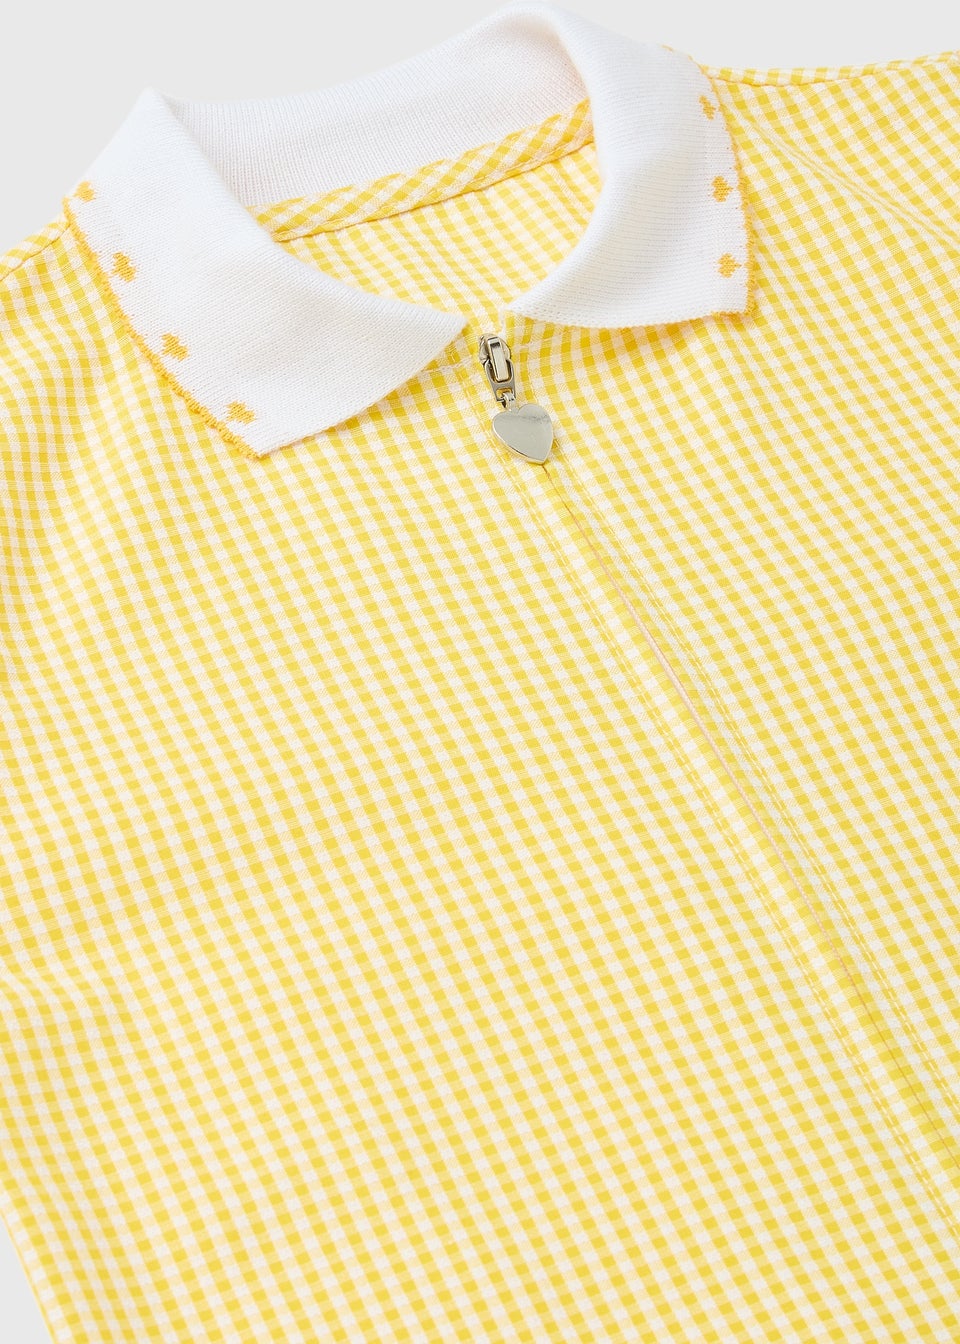 Girls Yellow Gingham Knit Collar School Dress (3-14yrs)